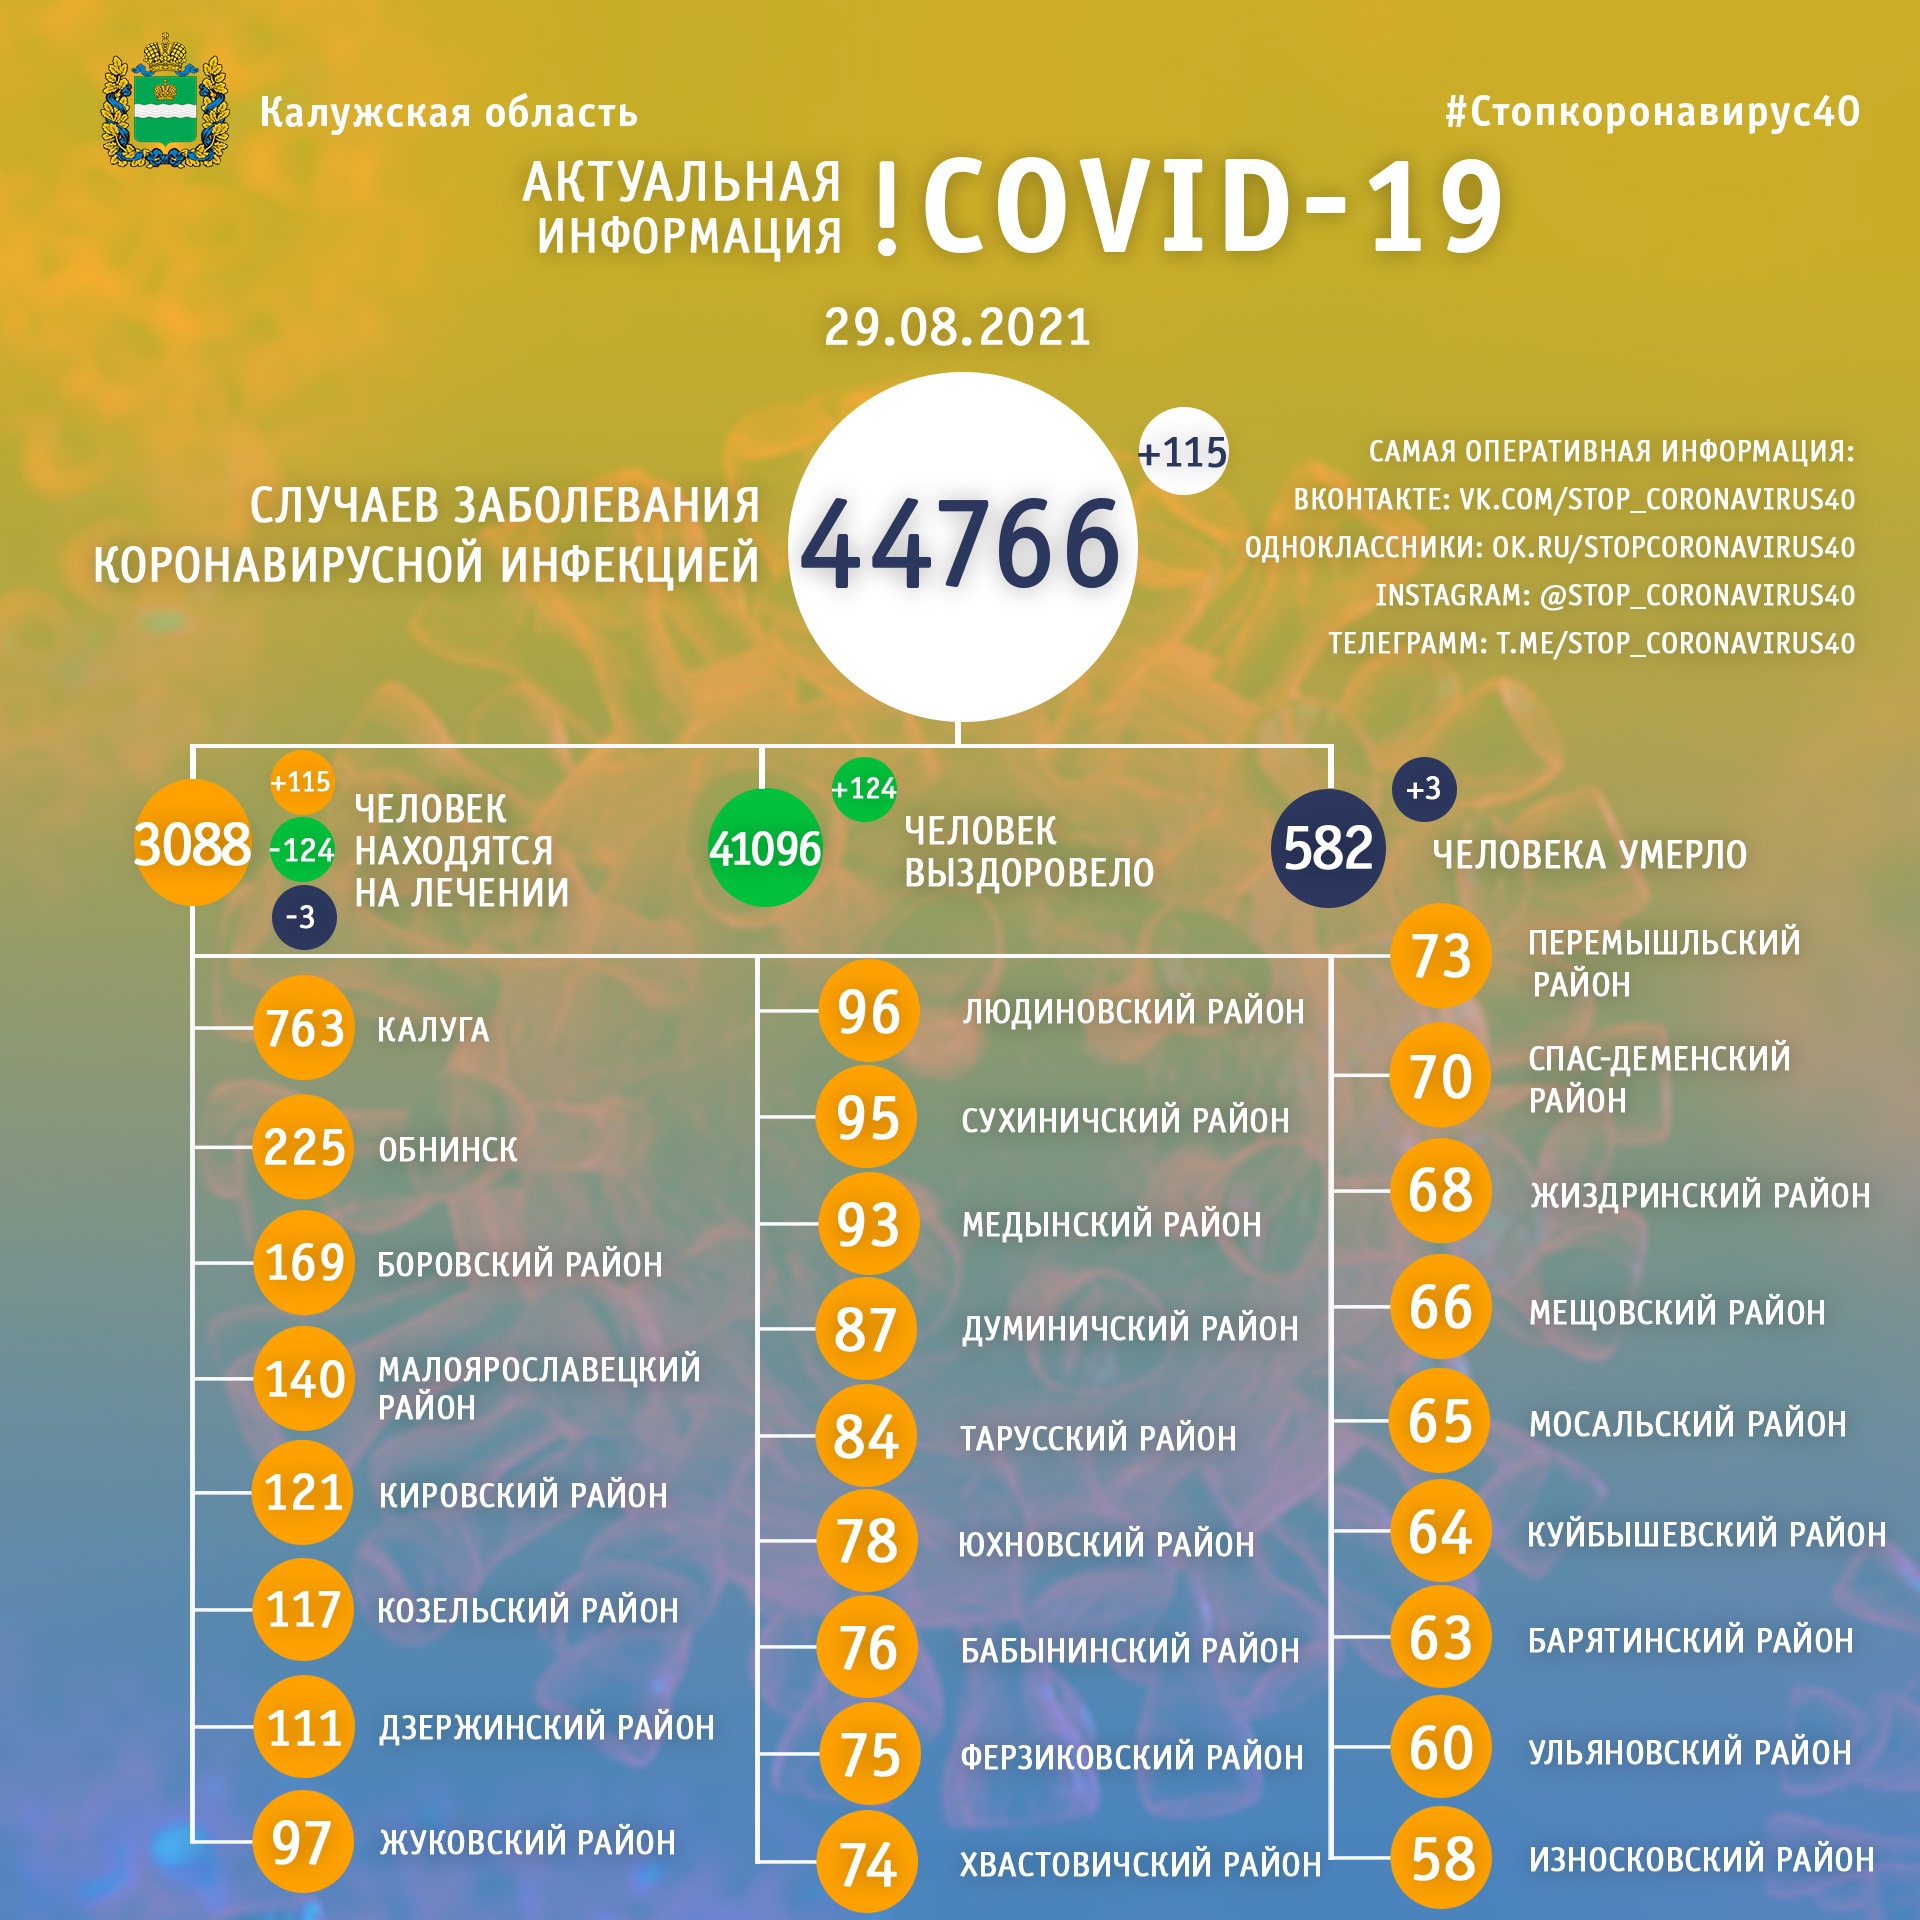 Официальная статистика по коронавирусу в Калужской области на 29 августа 2021 года.